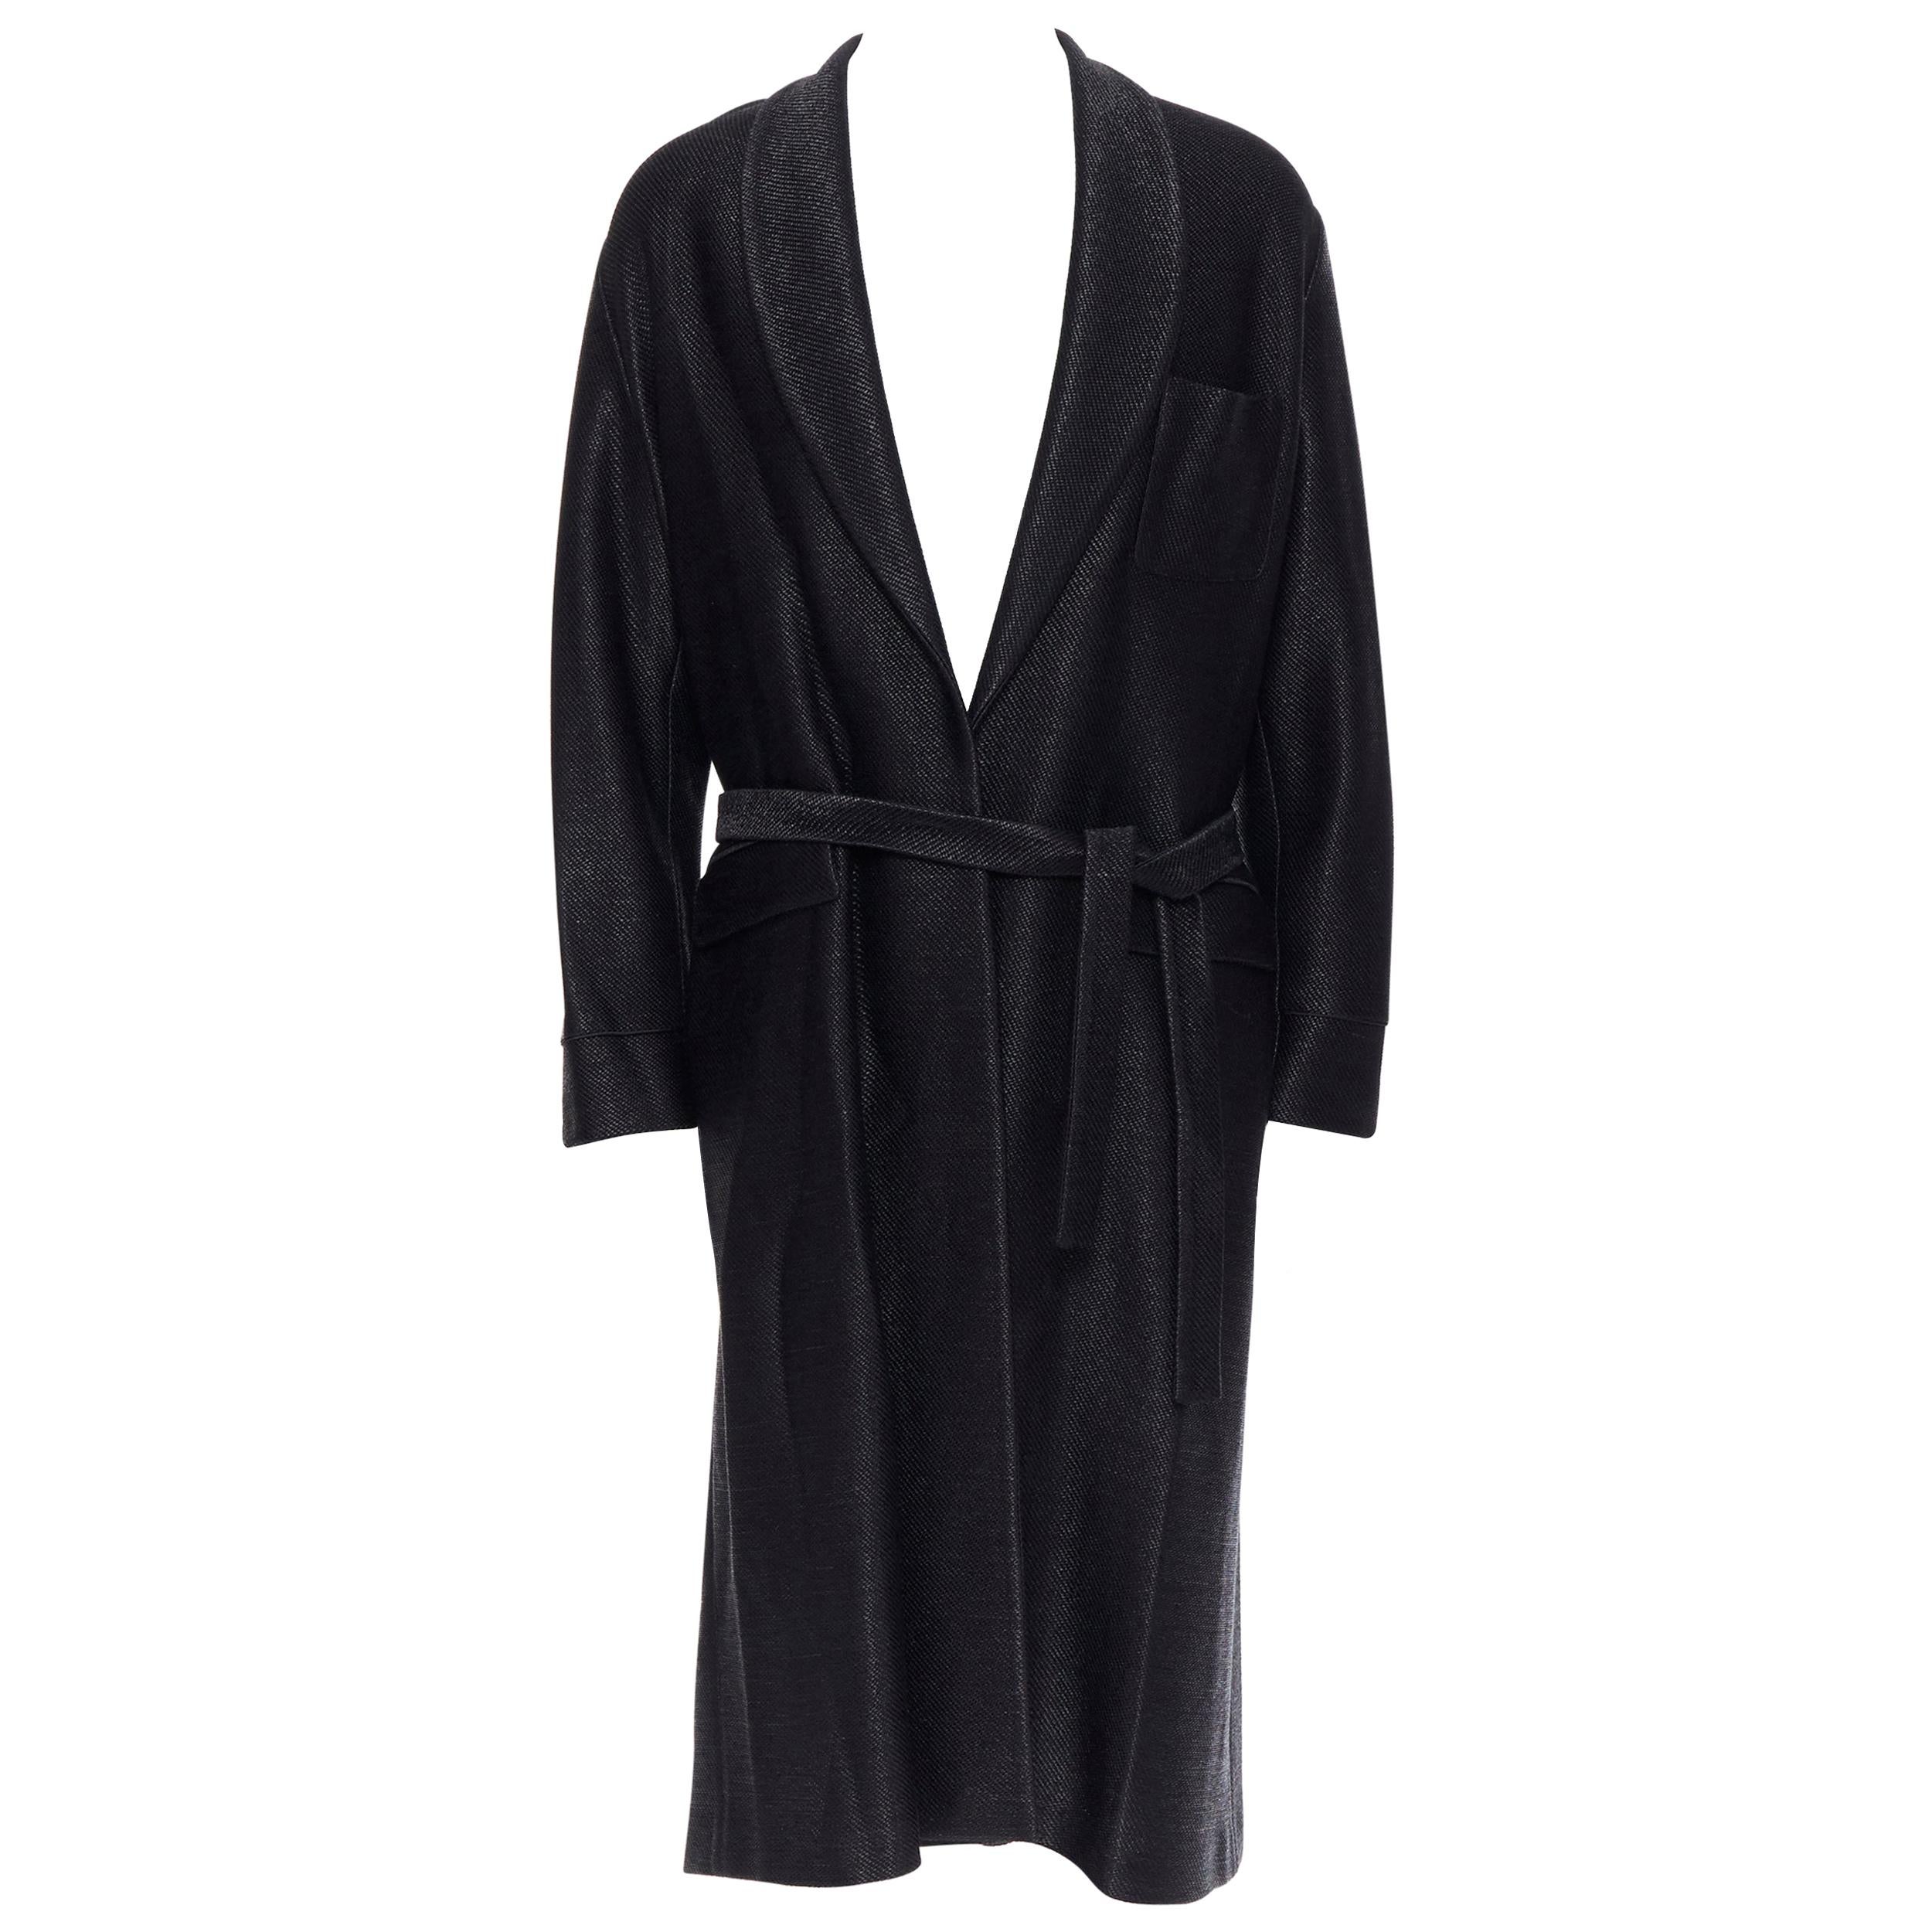 new LA PERLA MENSWEAR Runway black lacquered raffia weave belted robe coat M